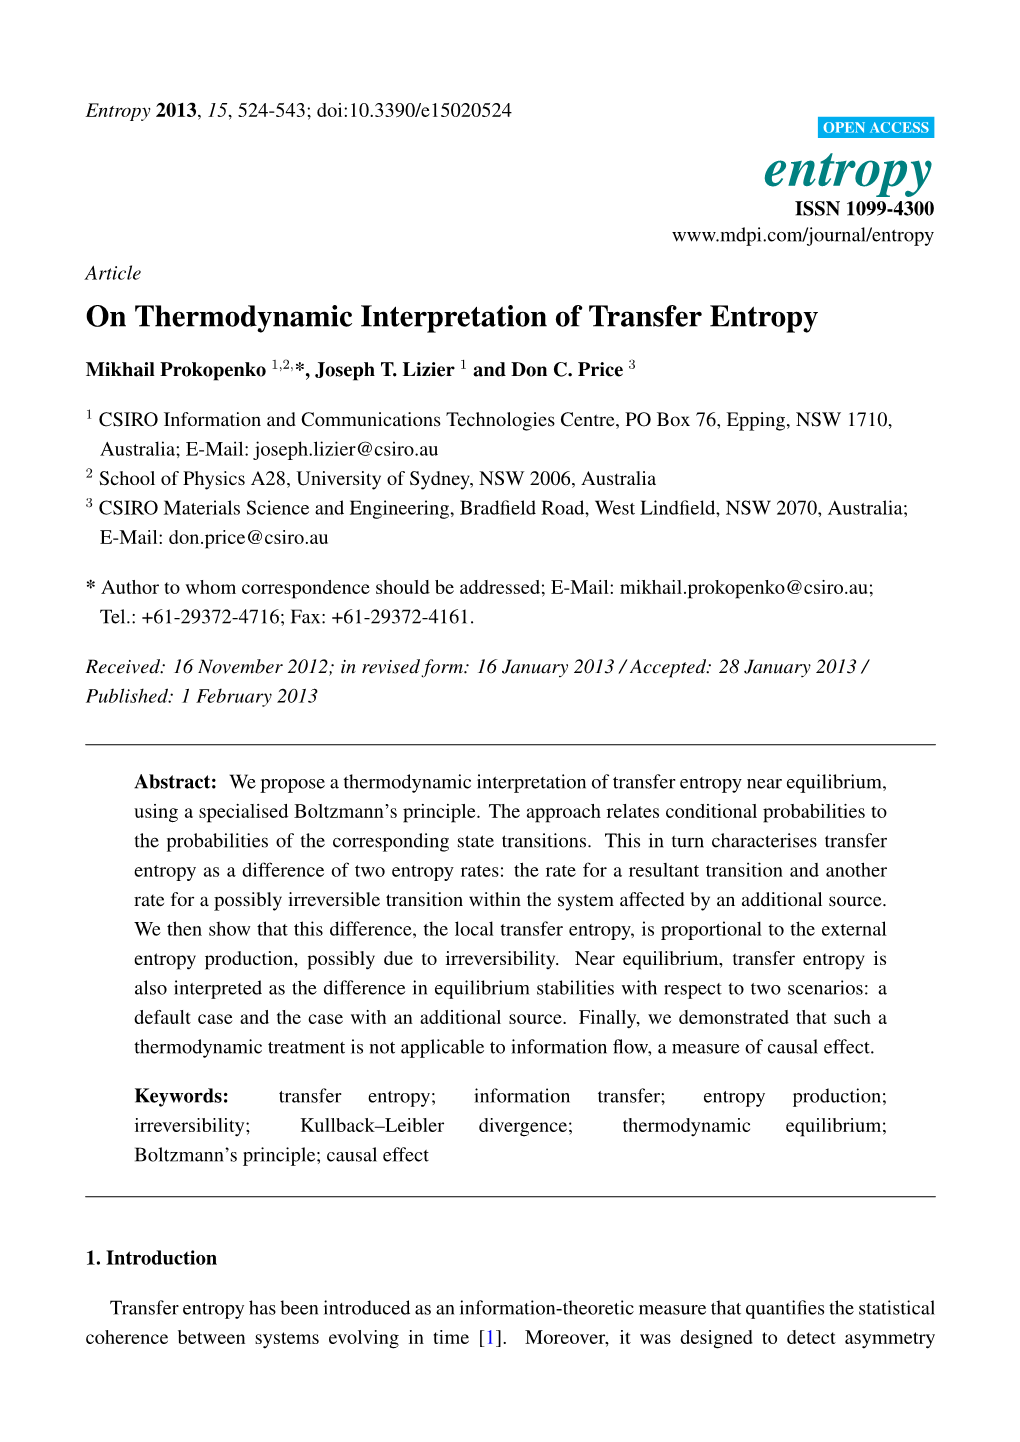 On Thermodynamic Interpretation of Transfer Entropy